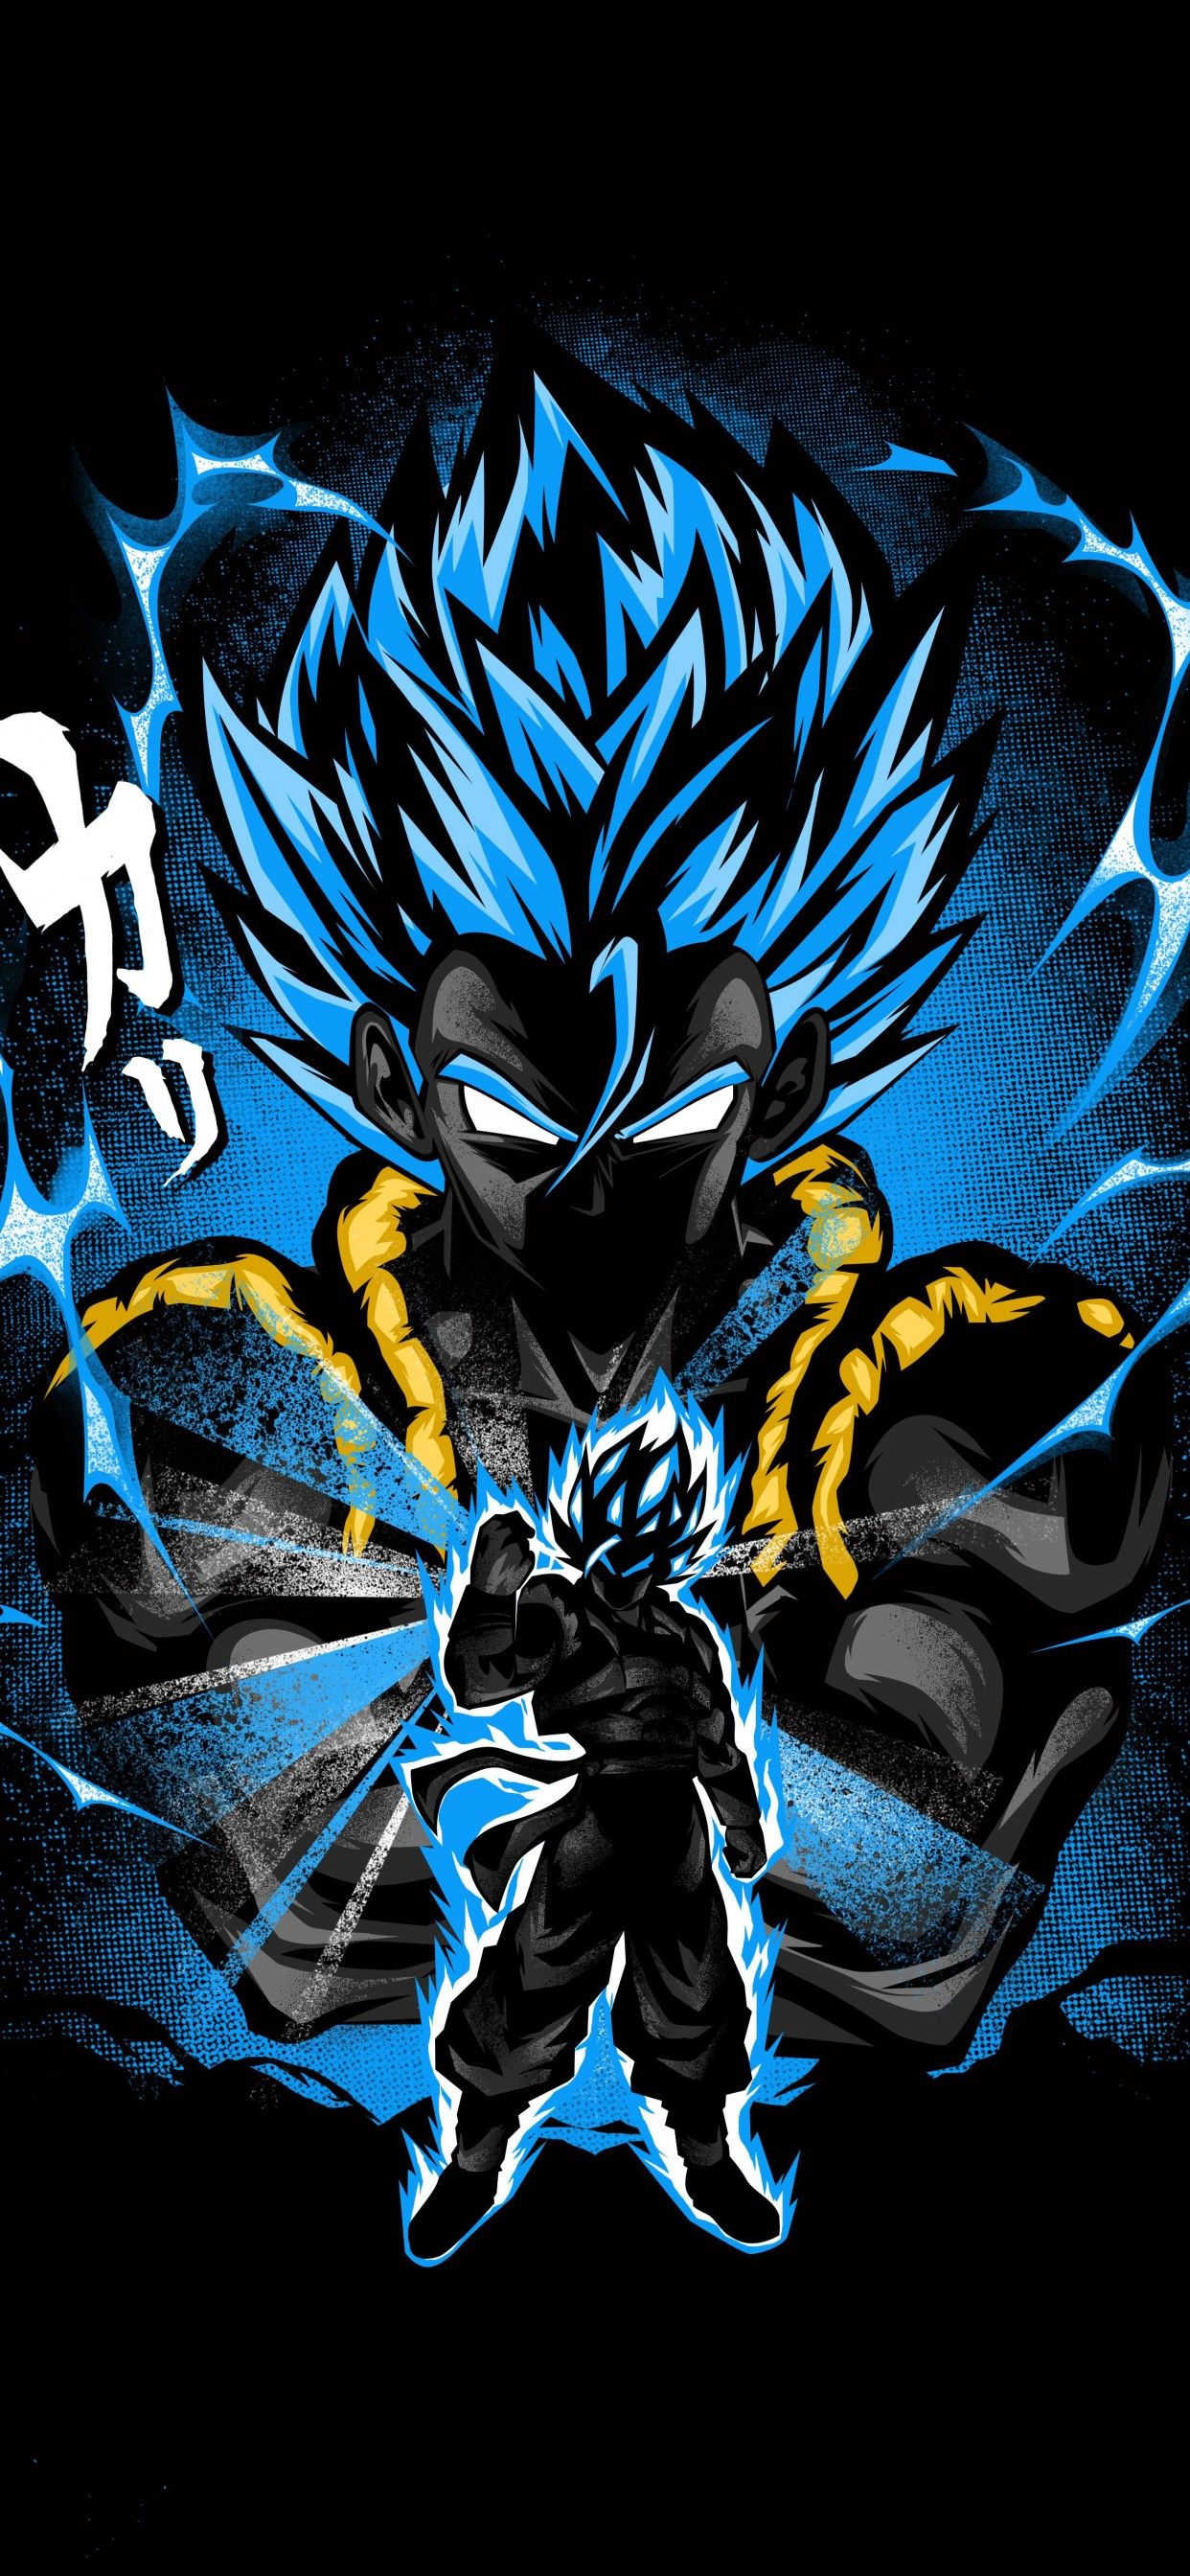 Goku 4K Wallpaper, Fusion attack, Dragon Ball Z, Anime series, Black background, AMOLED, 5K, Graphics CGI,